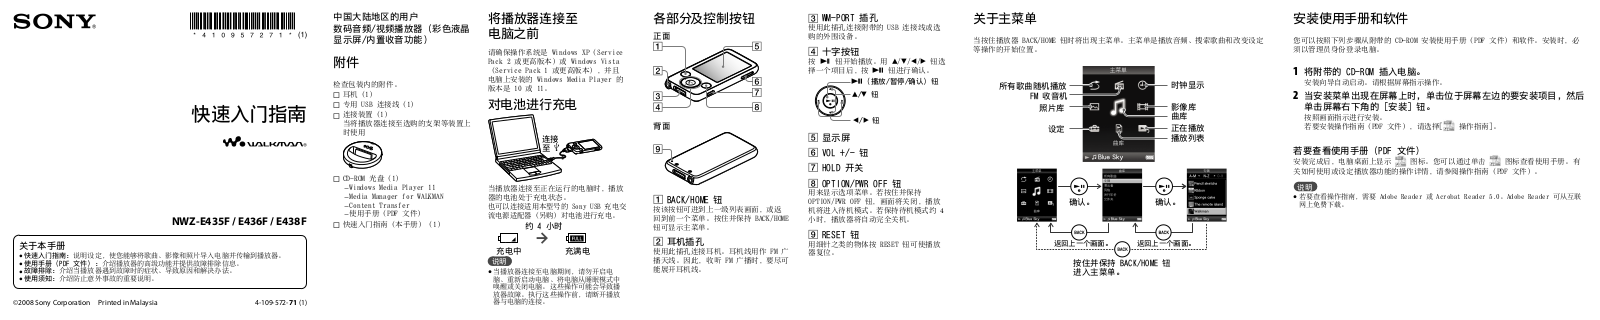 Sony NWD-E436F User Manual